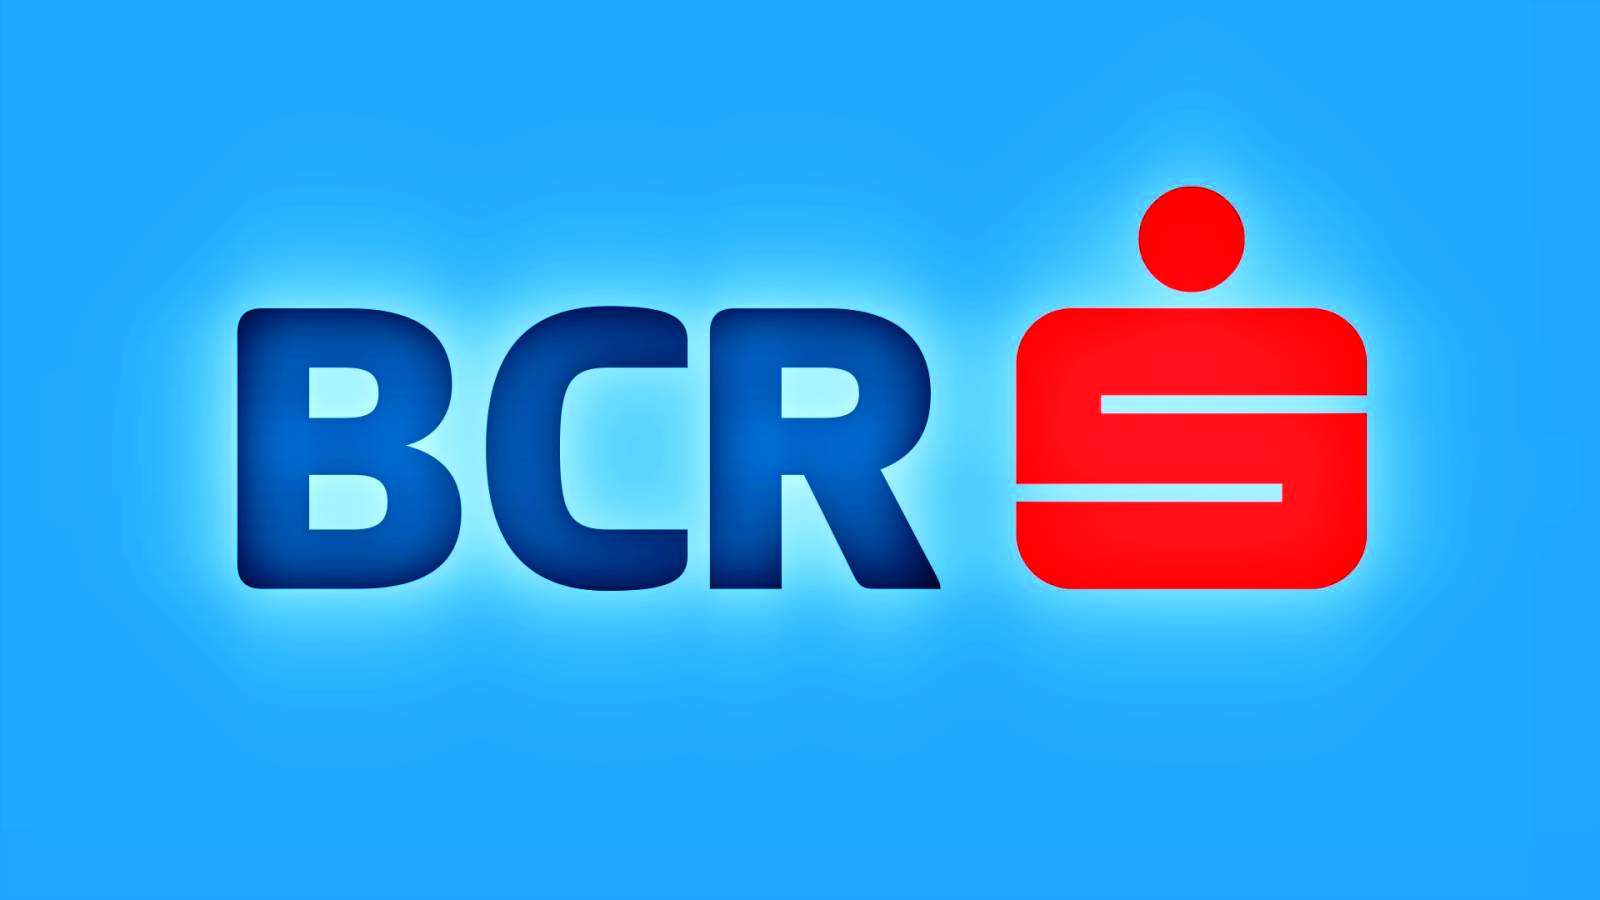 BCR Rumænien profil